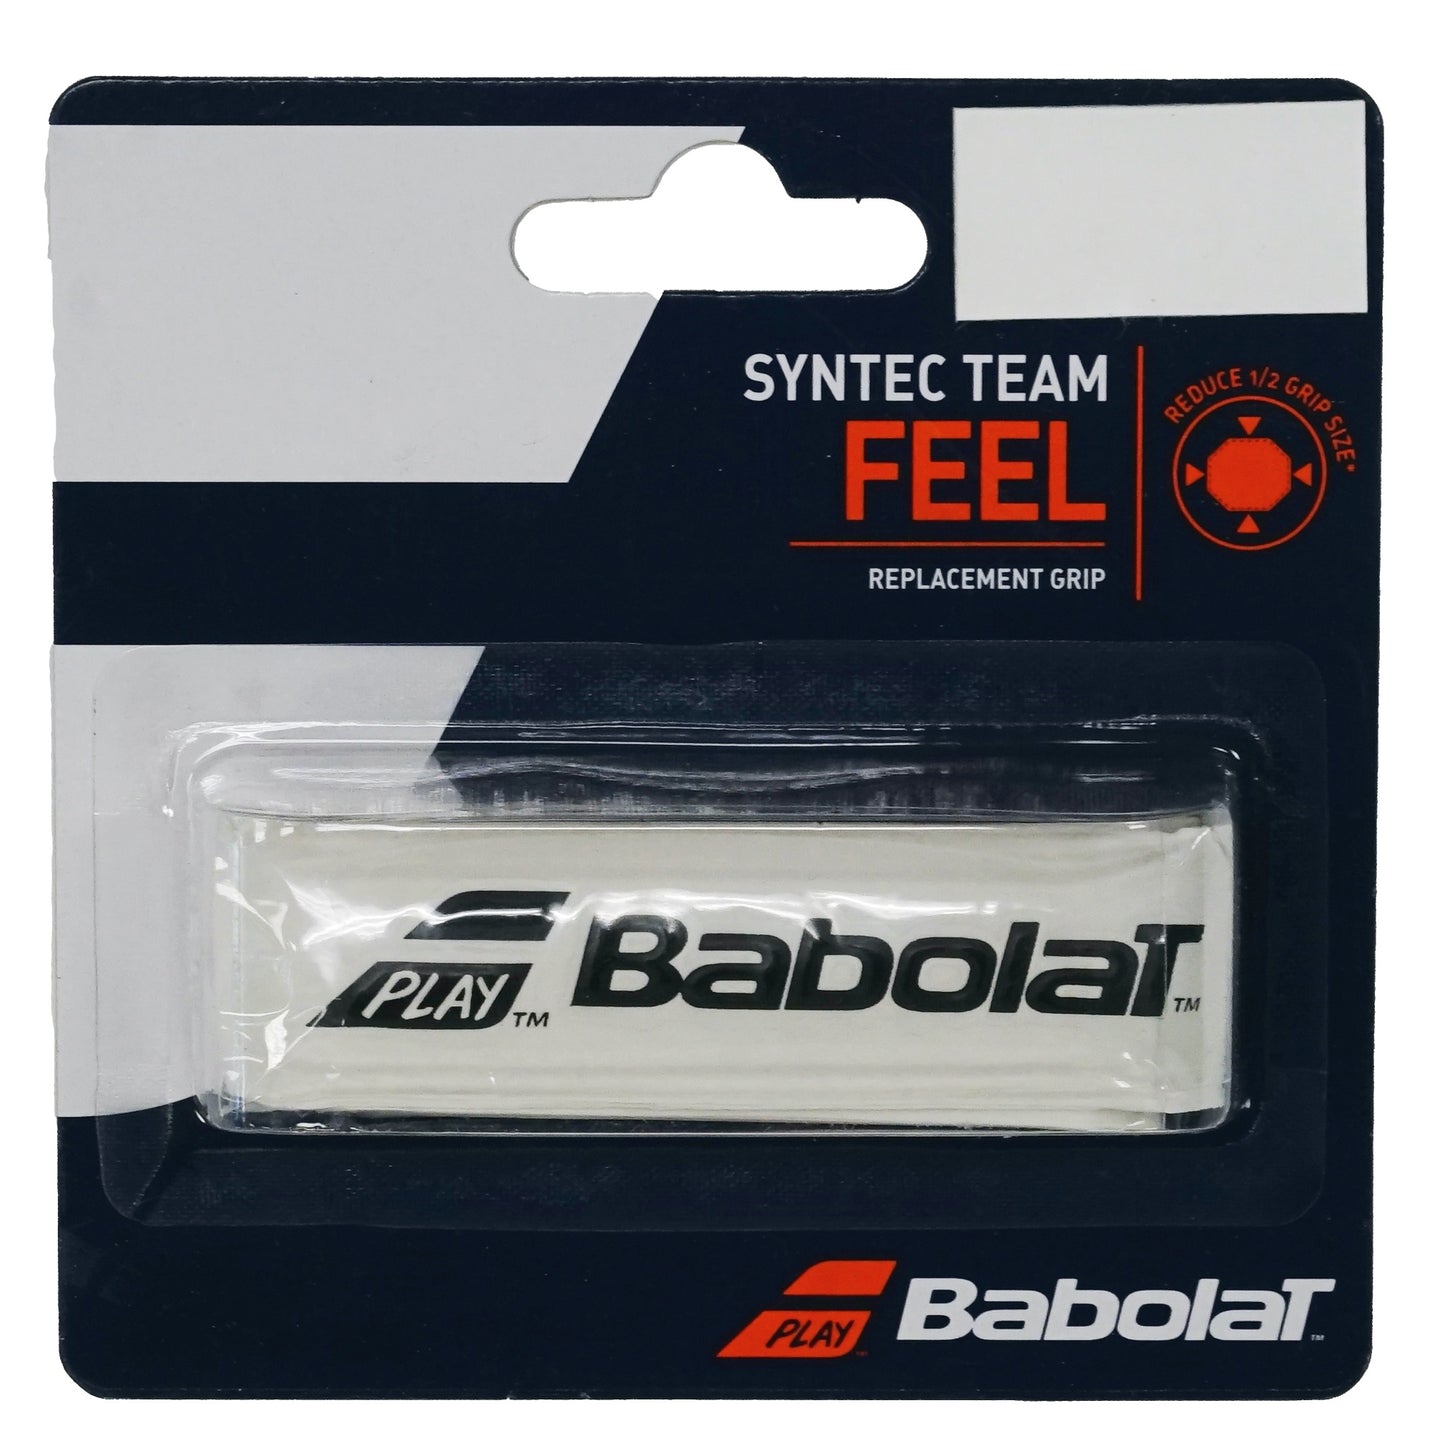 Babolat Syntec Team replacement grip